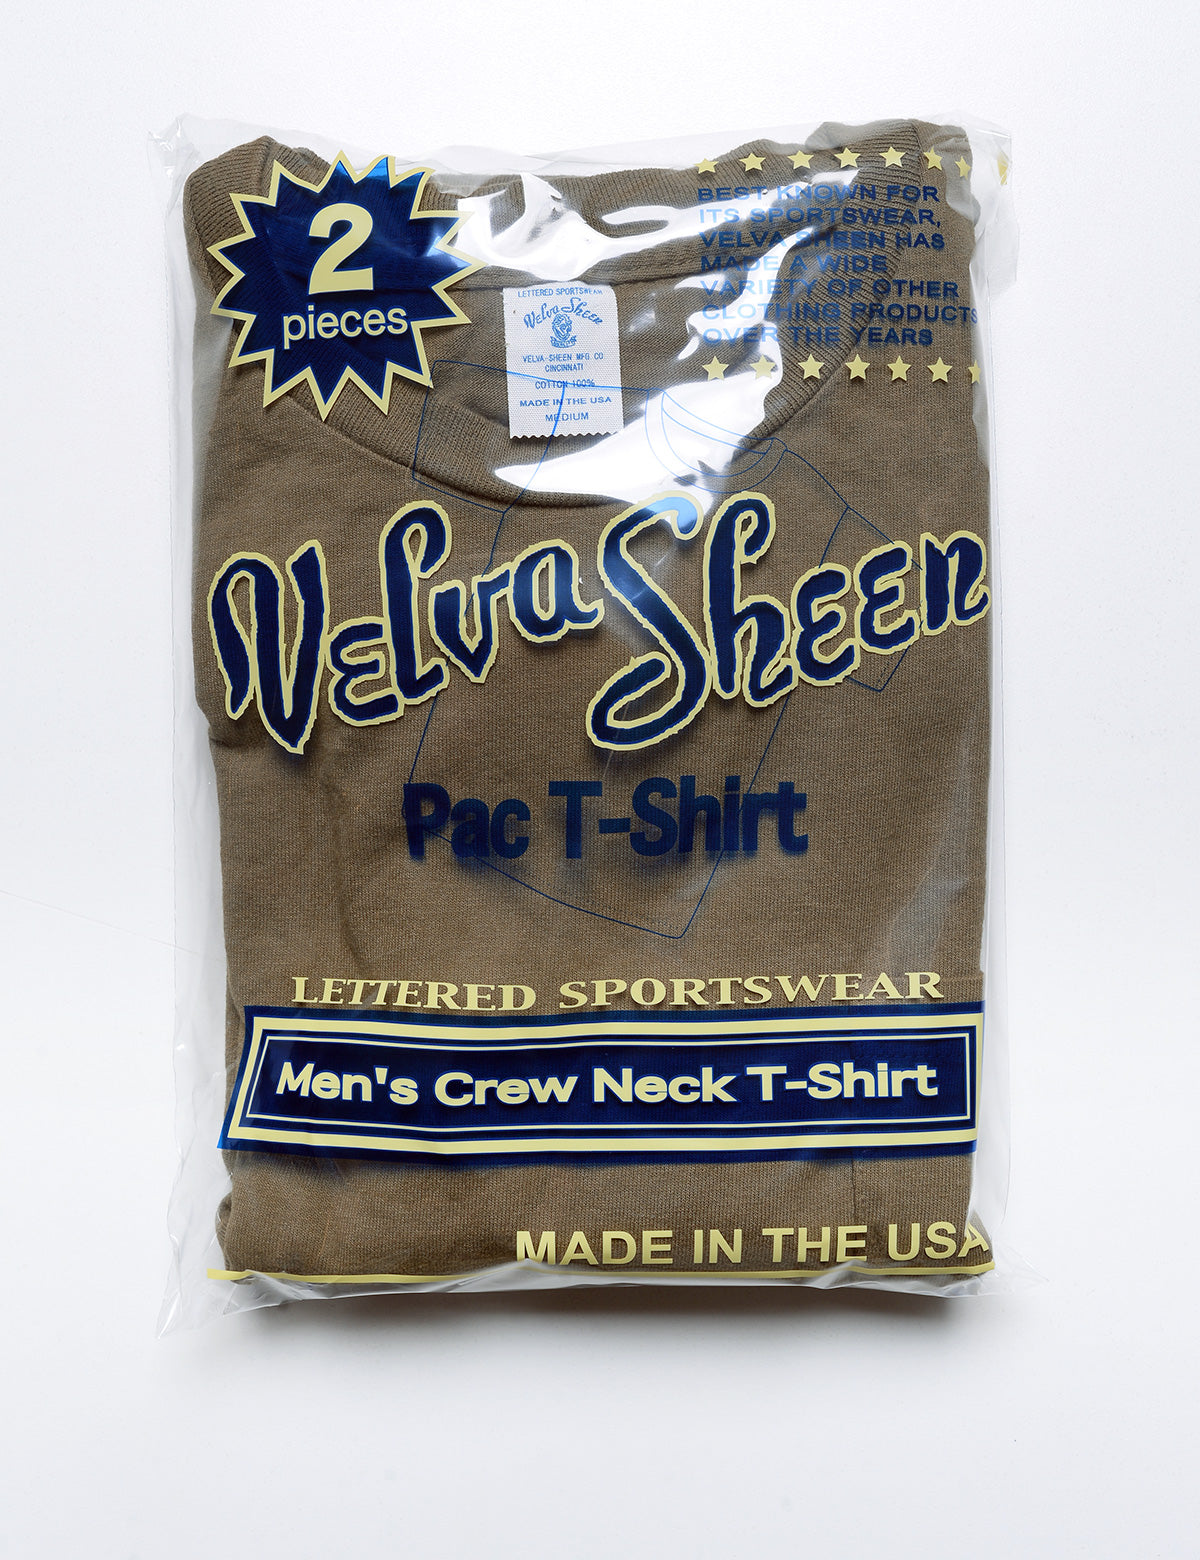 Velva Sheen 2-Pack Short Sleeve Pocket Tee in Olive in clear plastic packaging